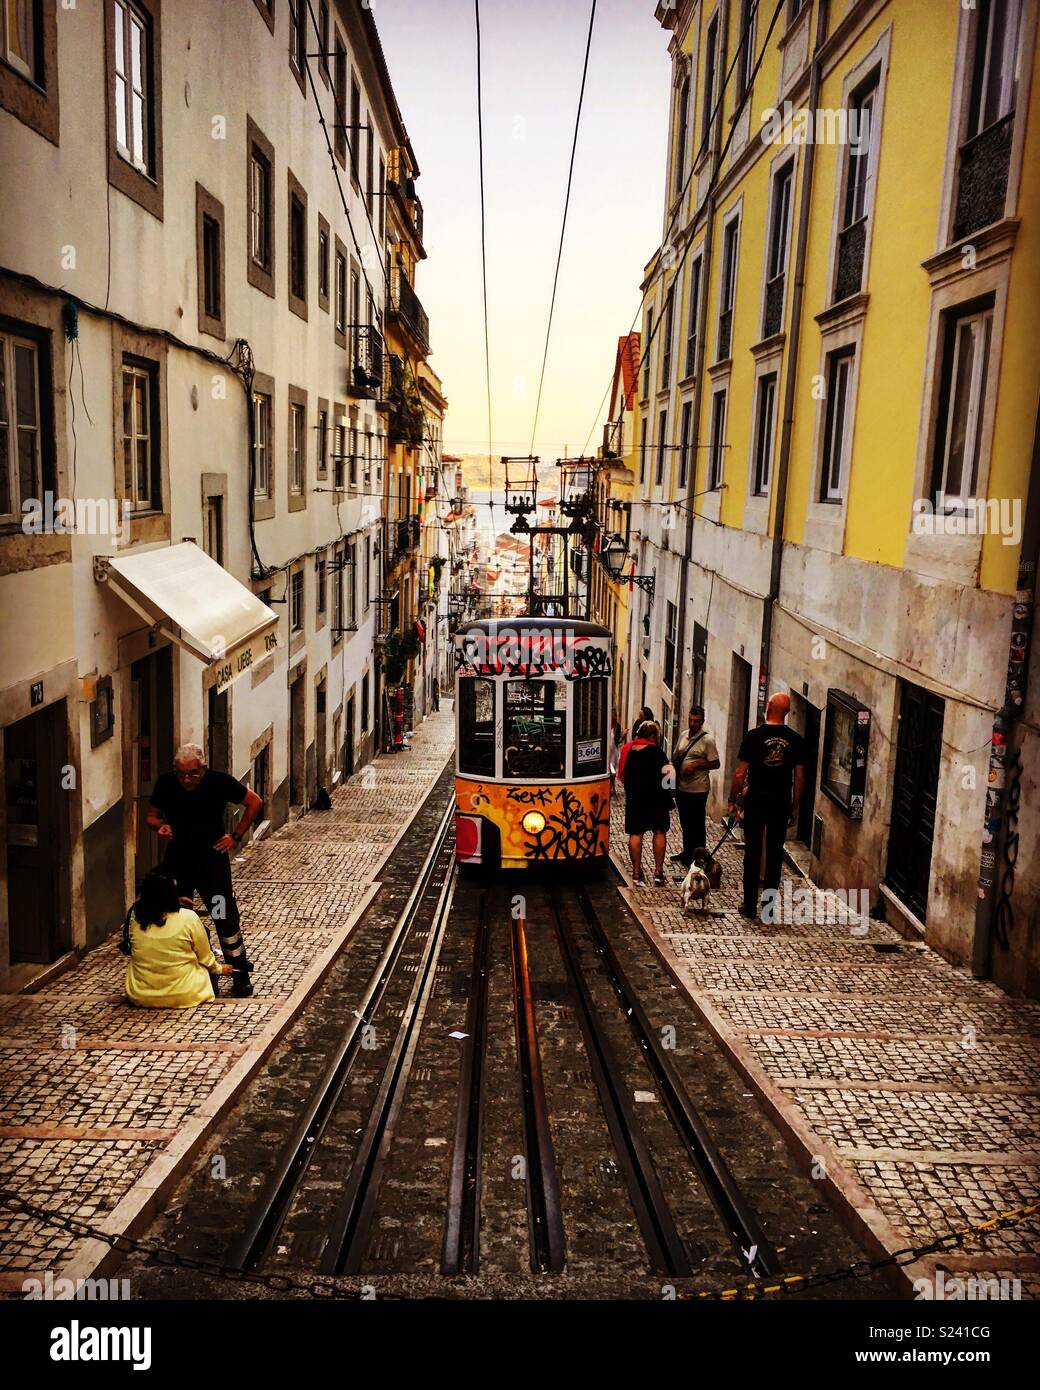 Lisbon tram with graffiti Stock Photo